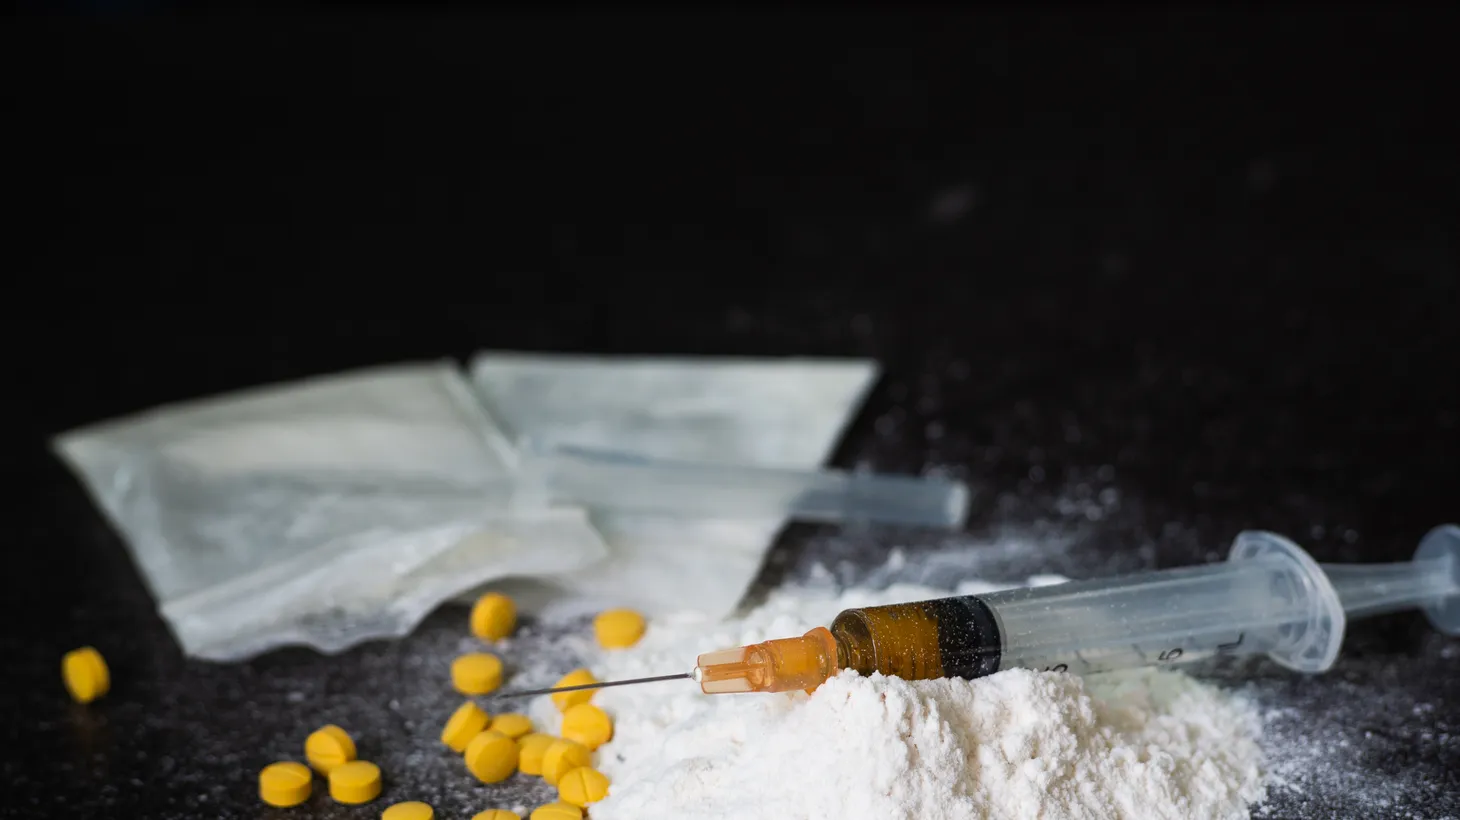 Amphetamine pills, Ketamine powder, plastic baggies of powdery substance along with a syringe needle.